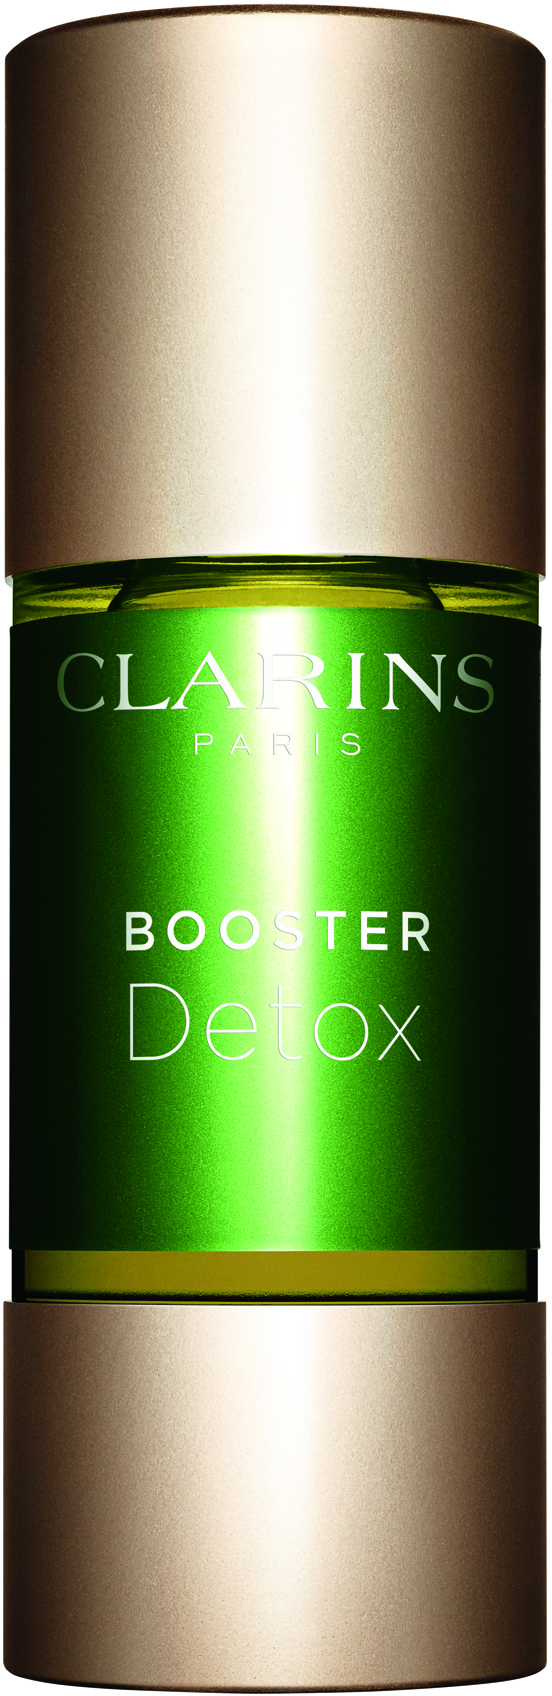 Clarins Booster Detox 15ml